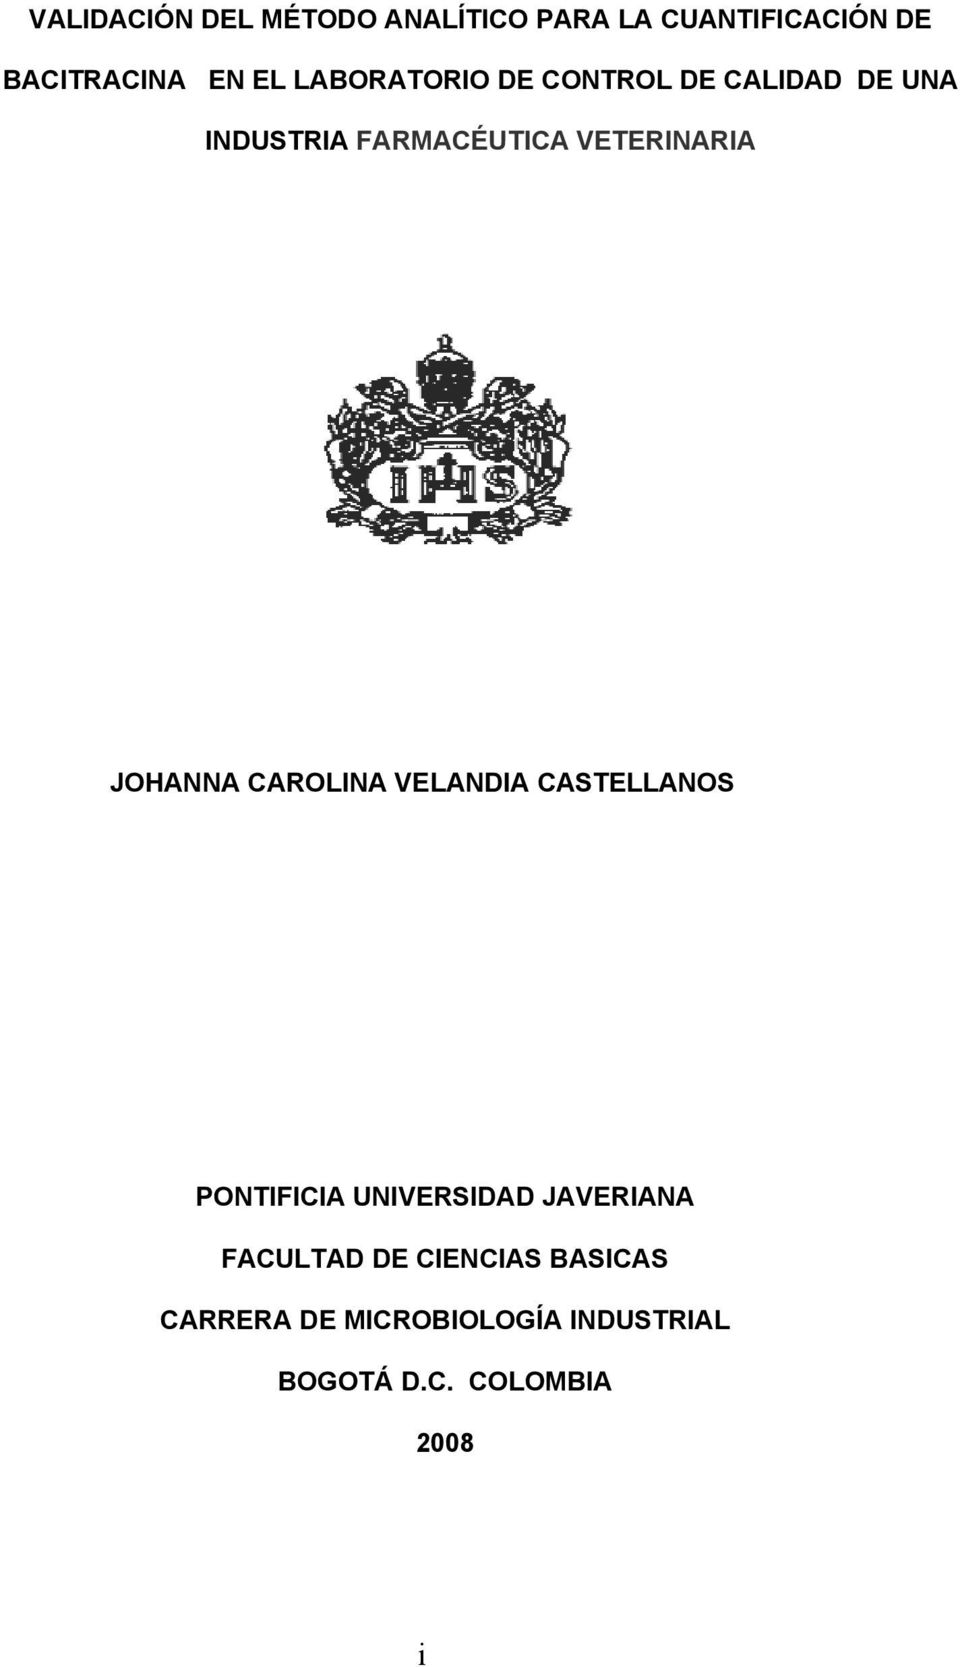 JOHANNA CAROLINA VELANDIA CASTELLANOS PONTIFICIA UNIVERSIDAD JAVERIANA